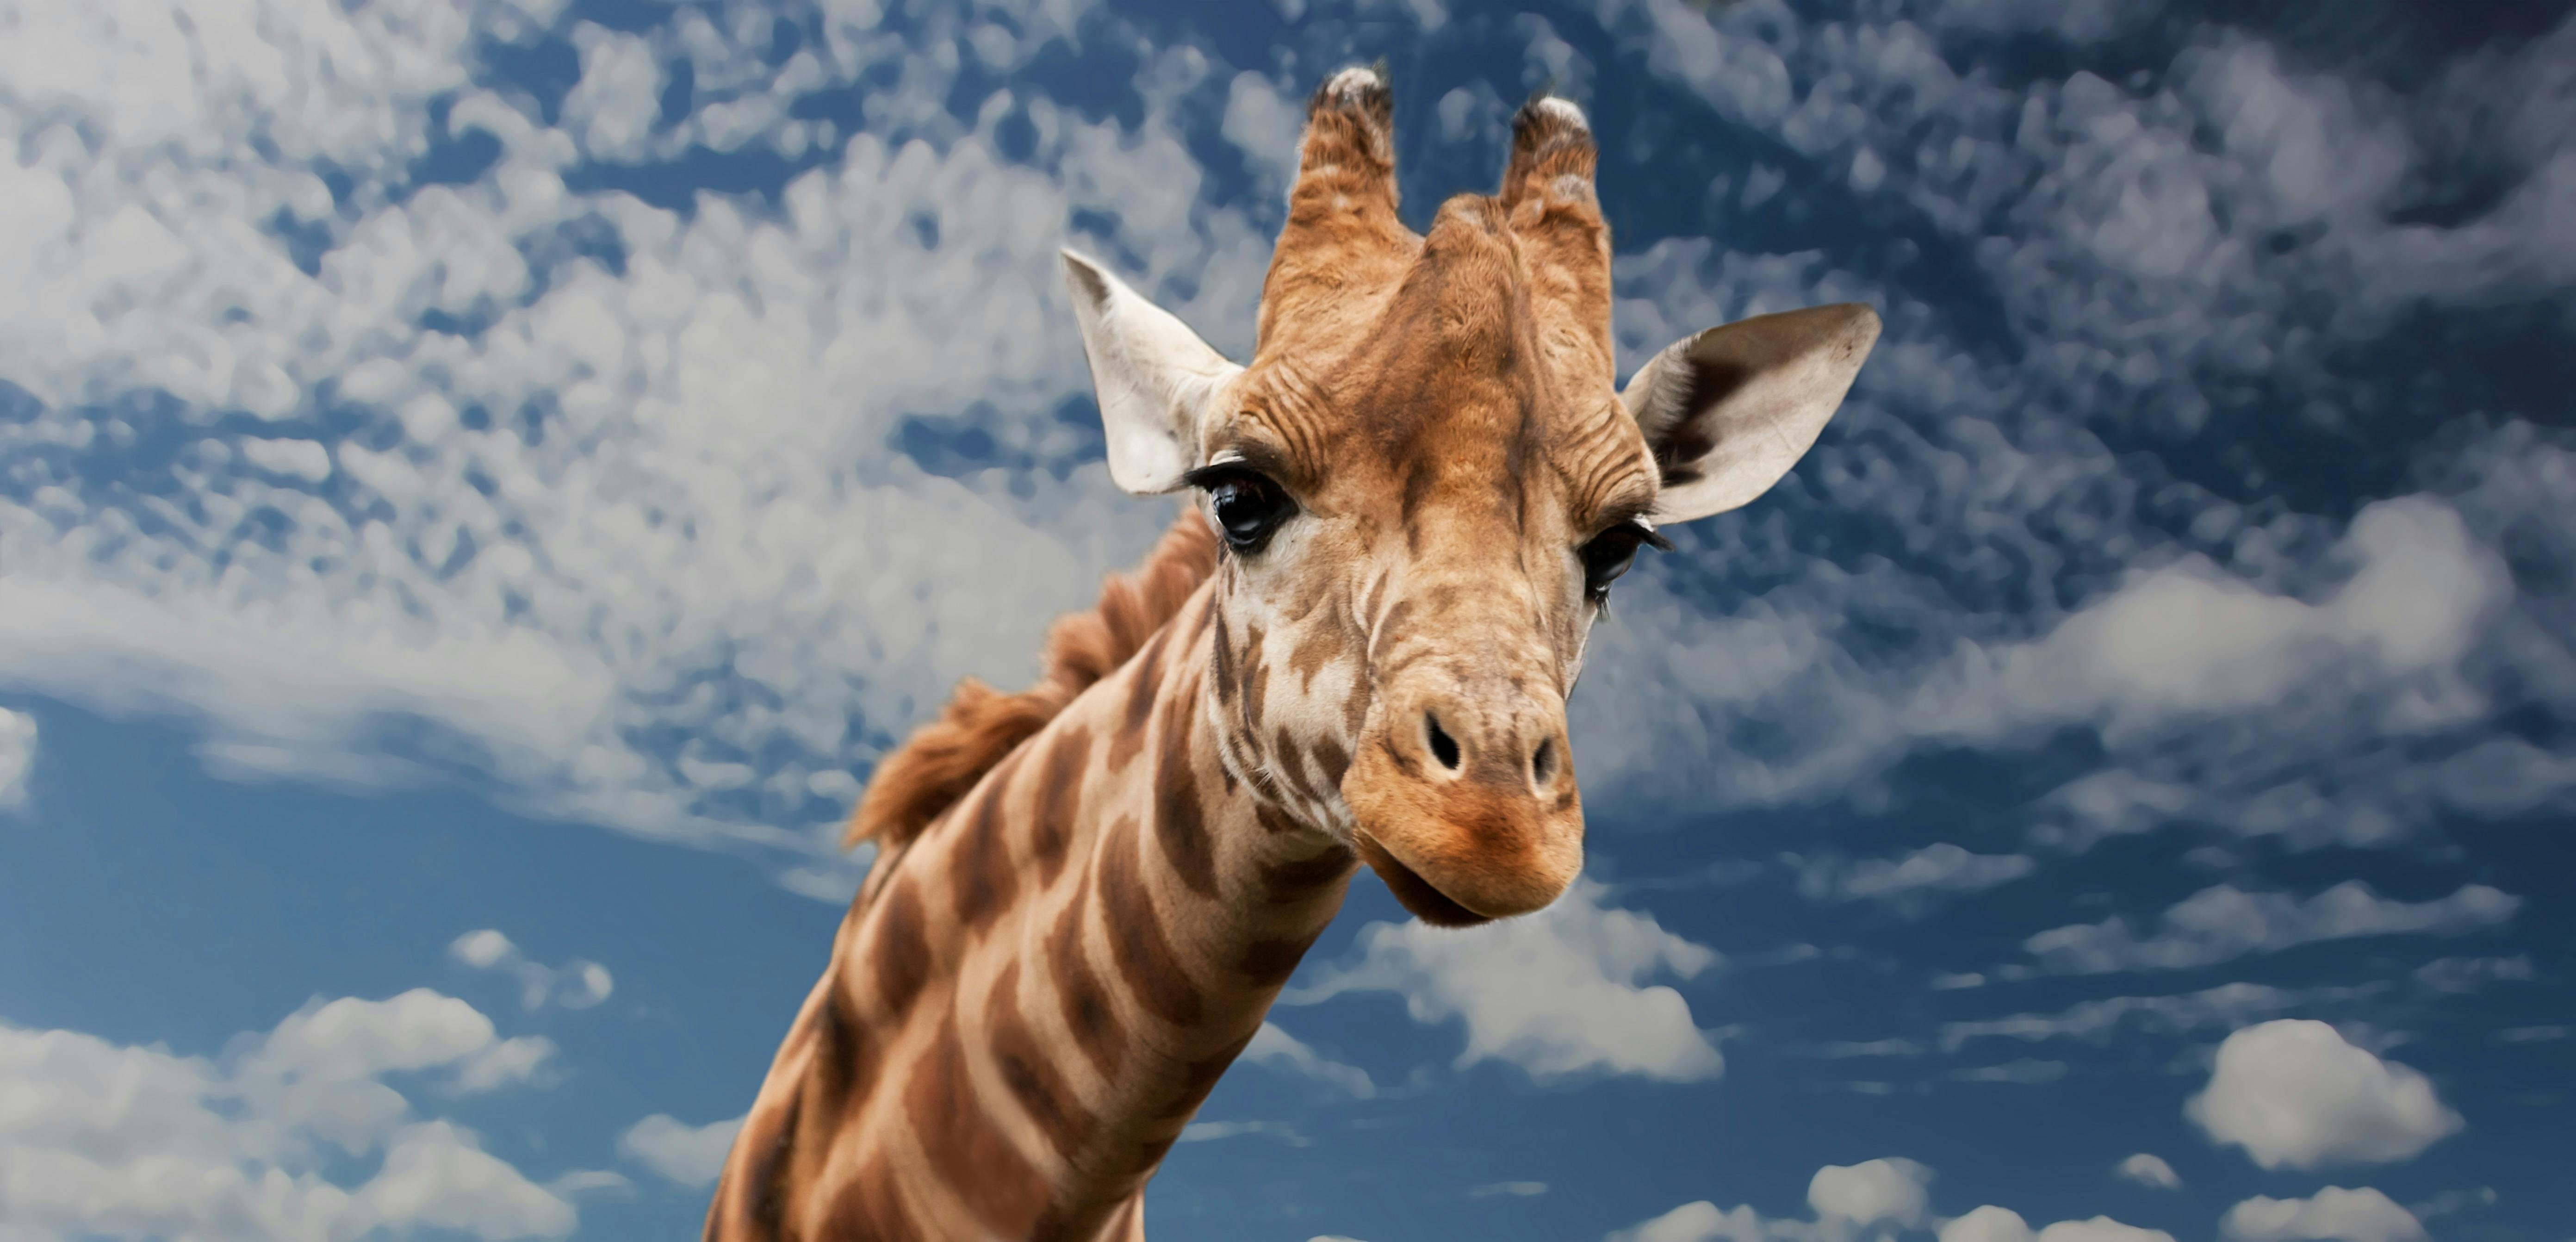 900+ Best Giraffe Photos · 100% Free Download · Pexels Stock Photos